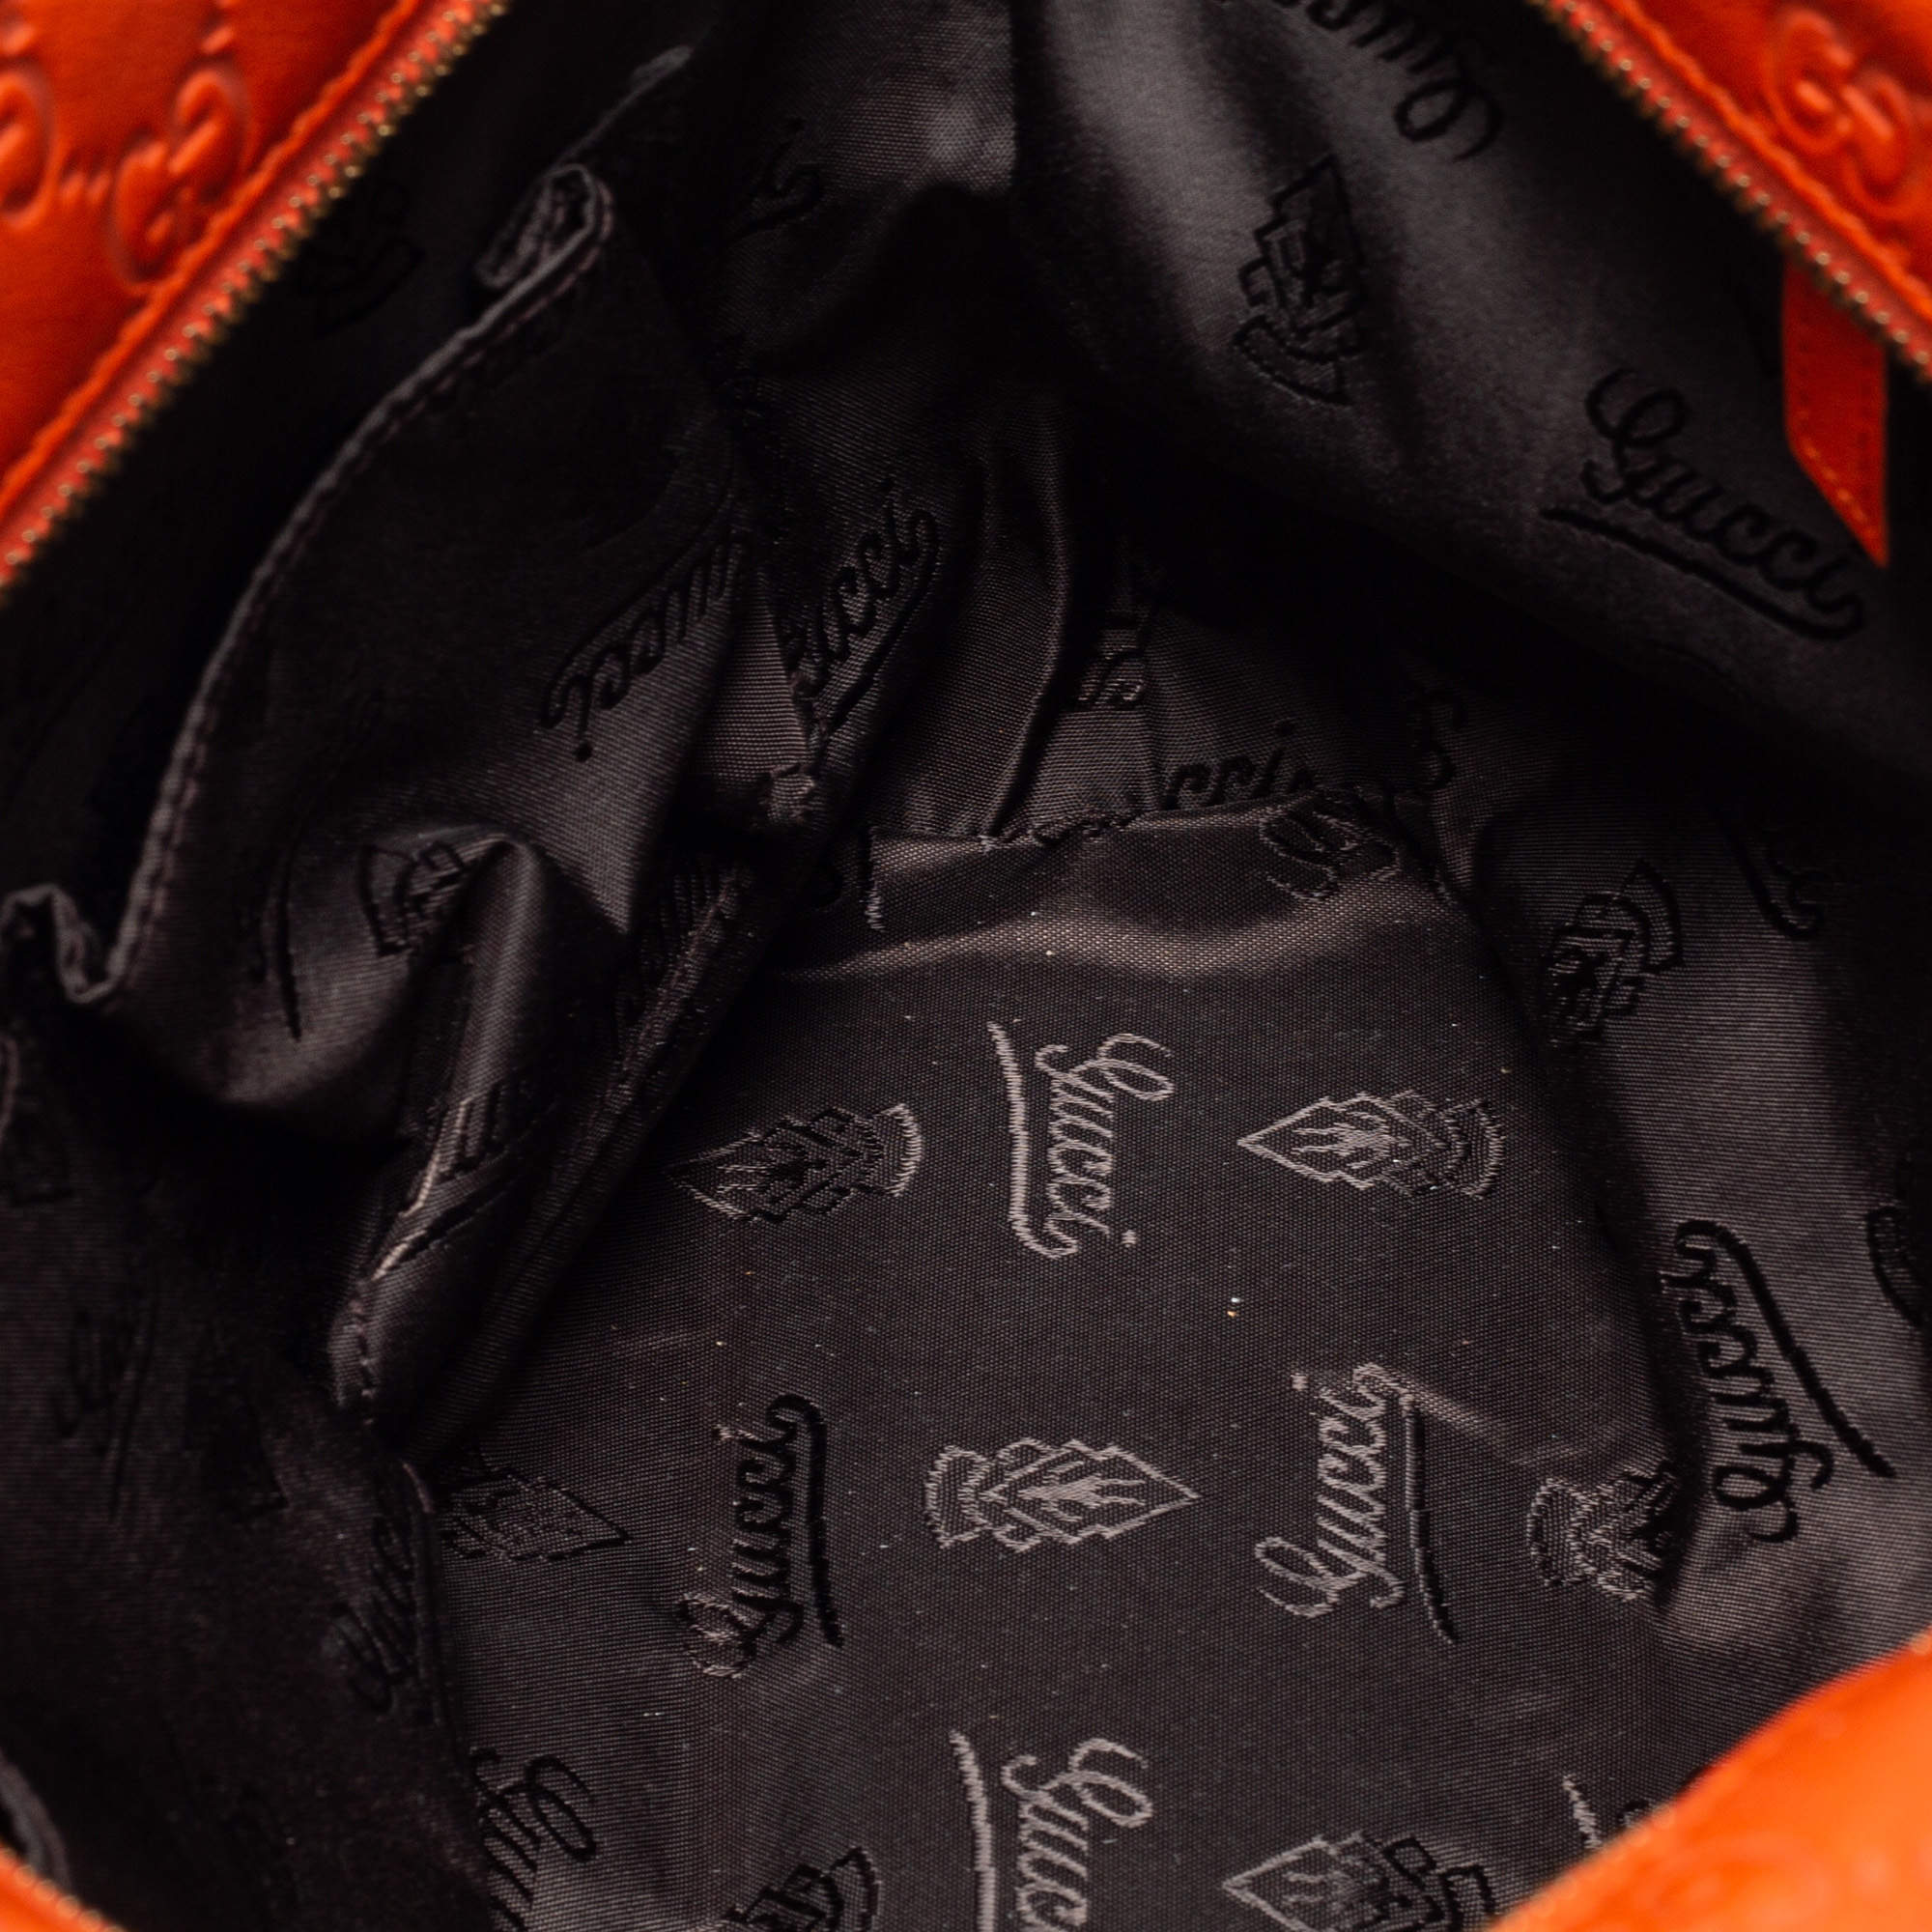 Leather tote Gucci Orange in Leather - 26455648